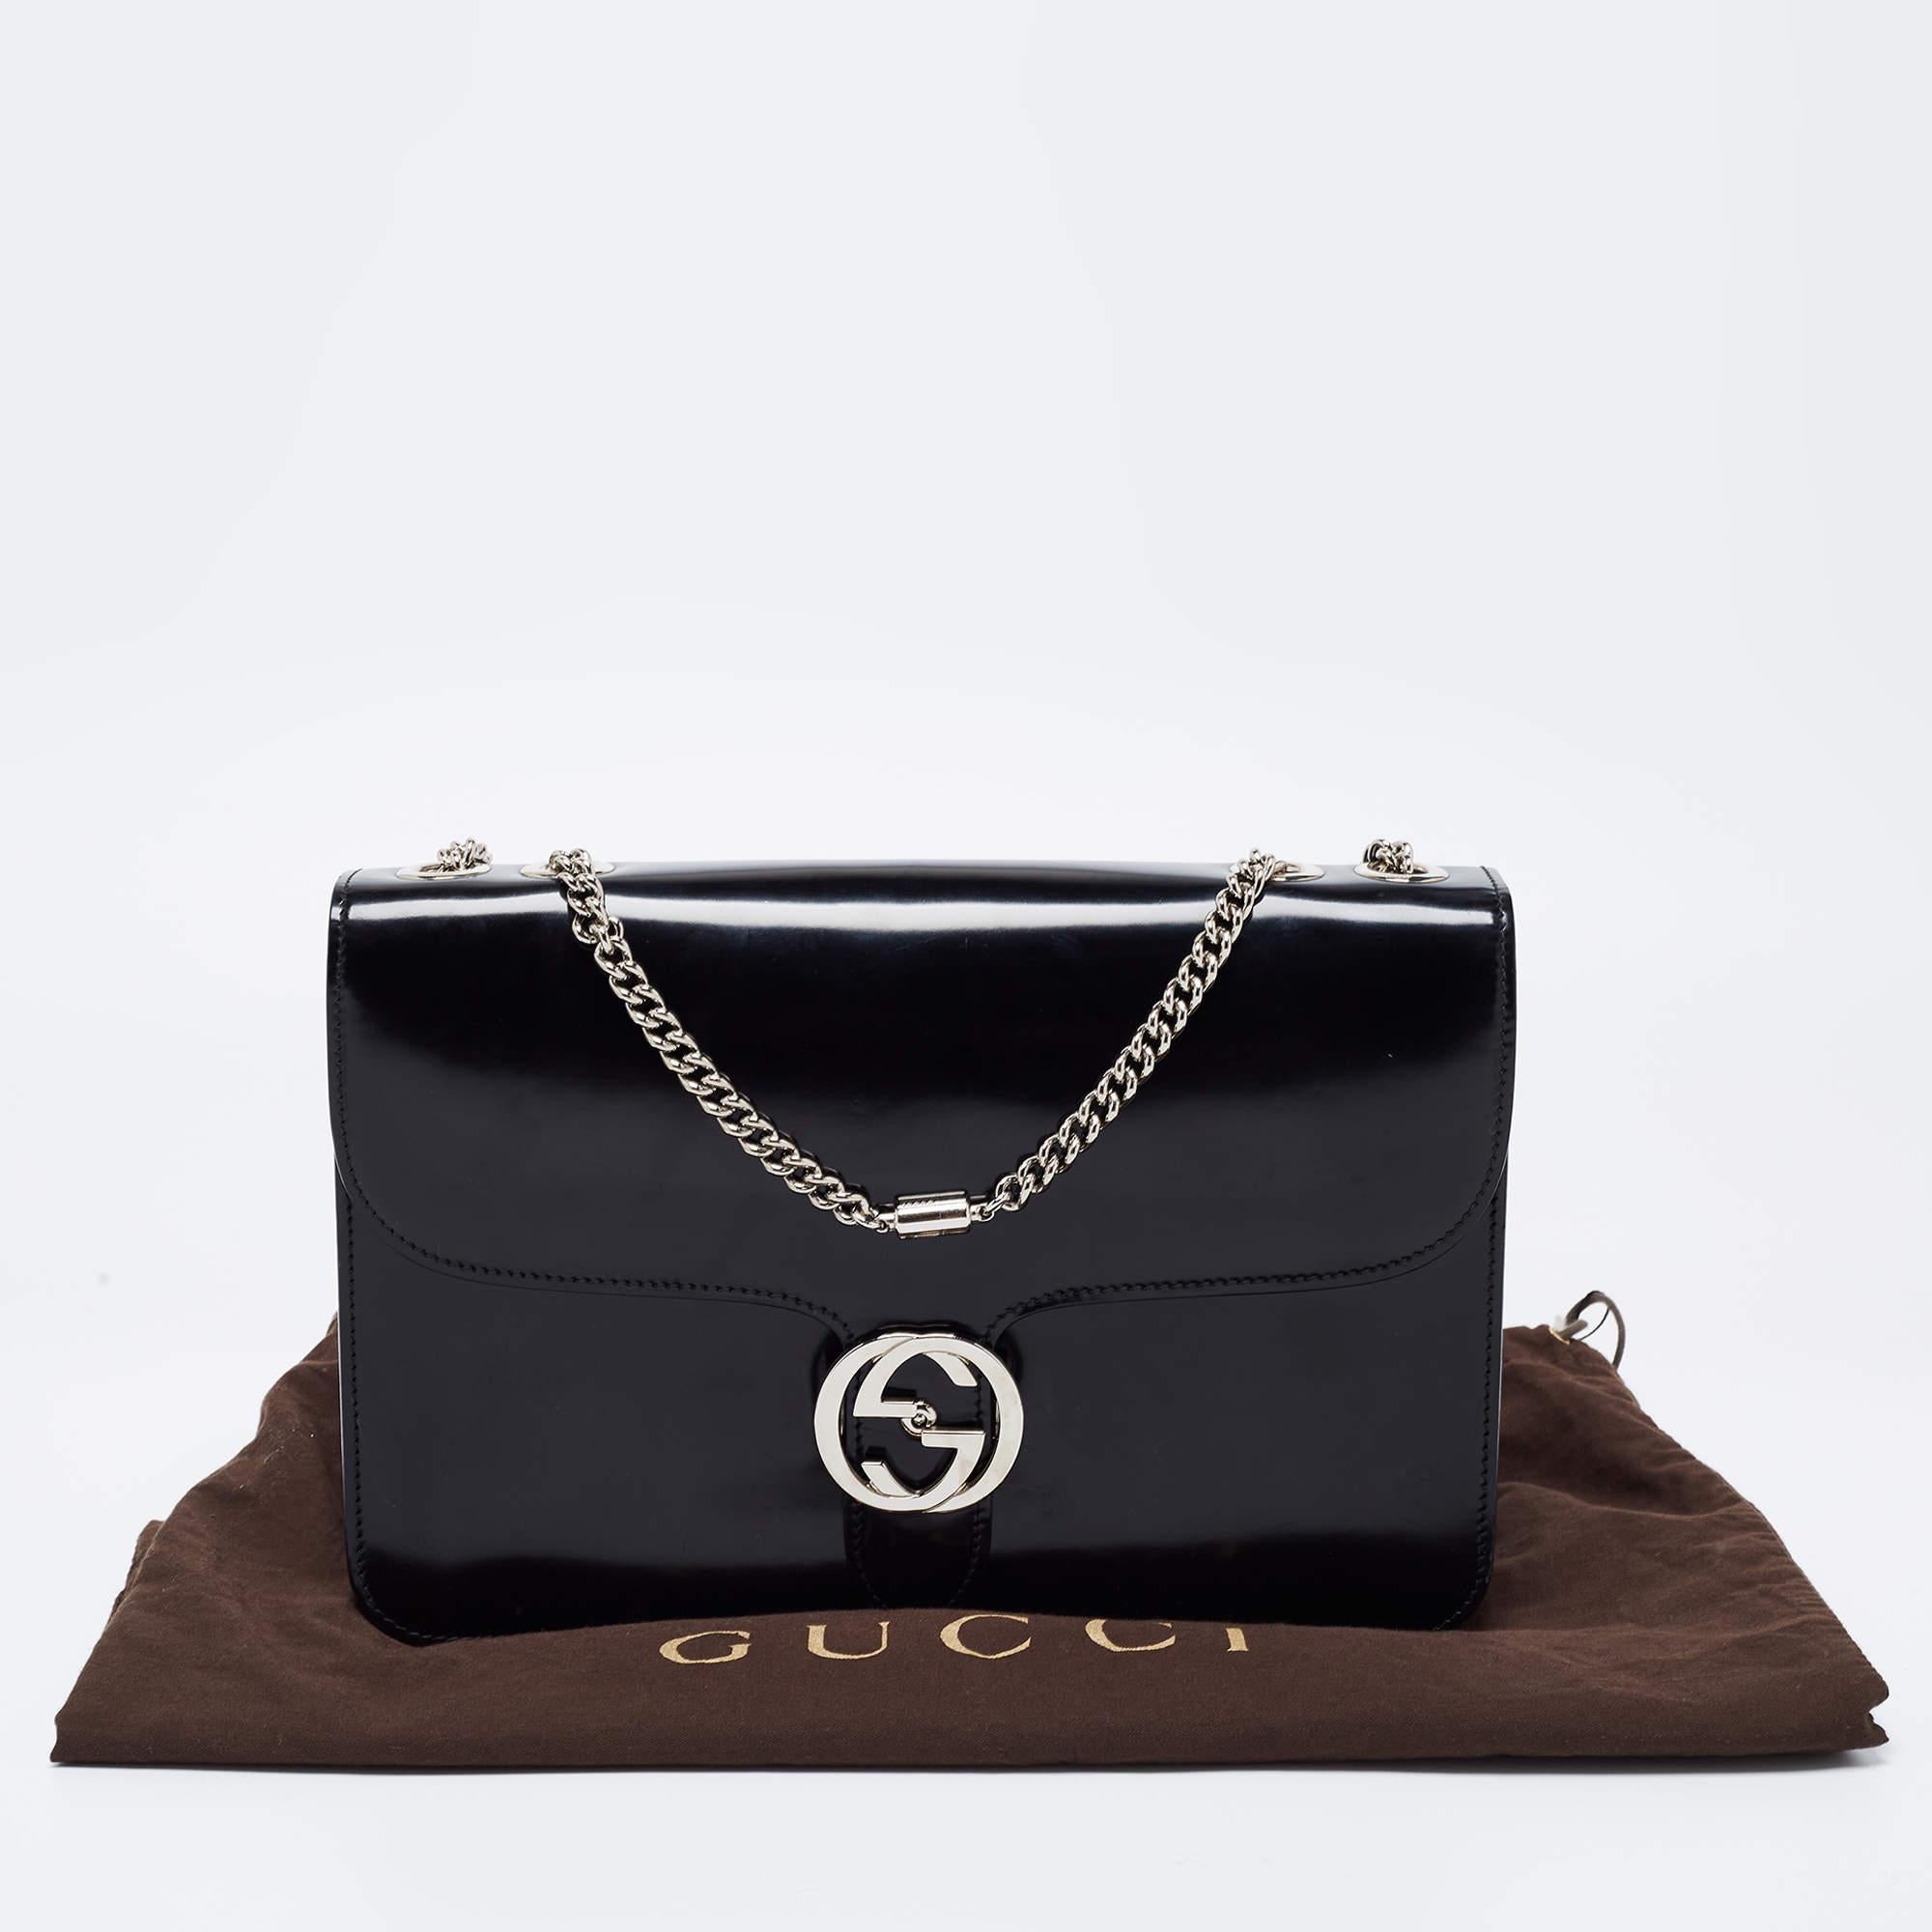 Gucci Black Leather Medium Interlocking G Shoulder Bag 10